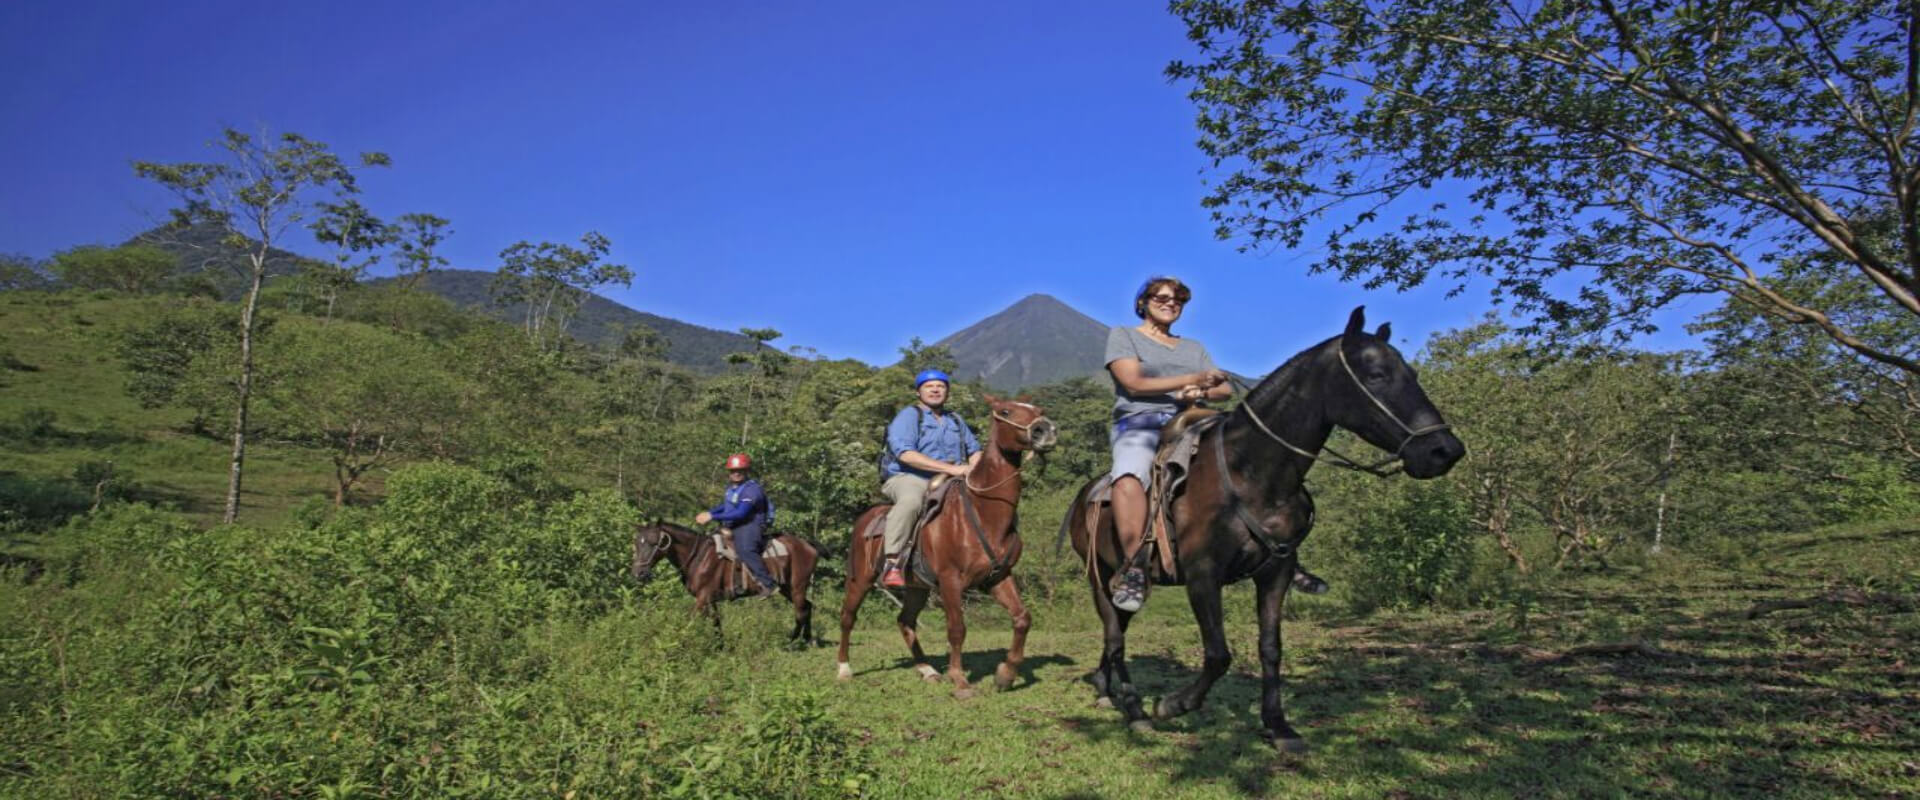 Cabalgata a la catarata La Fortuna y aldea indígena | Costa Rica Jade Tours